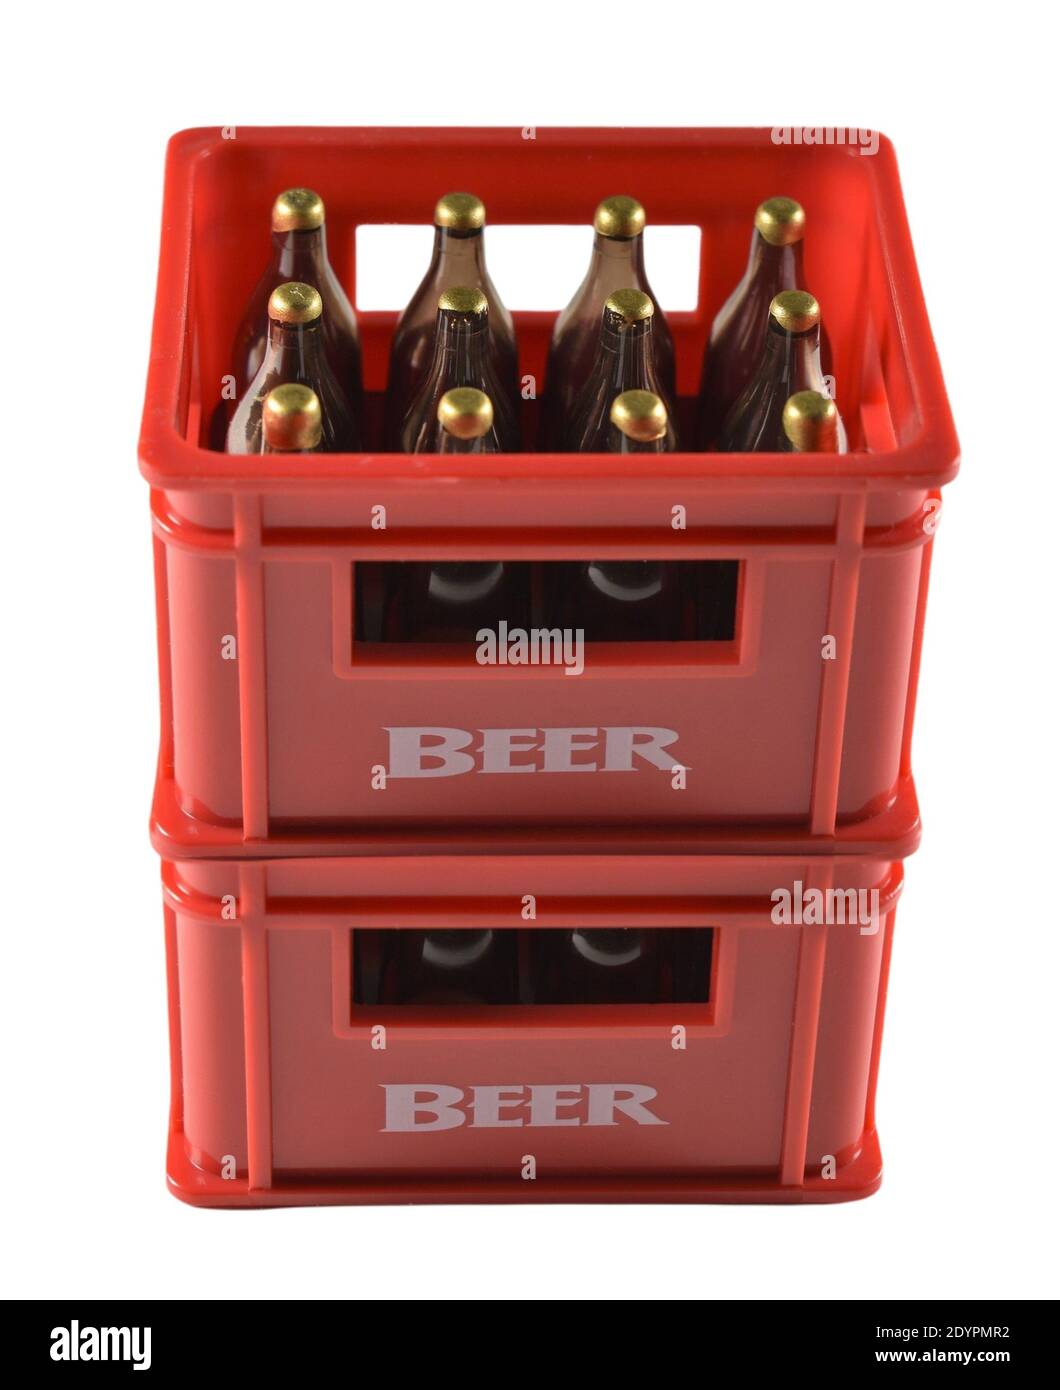 Beer bottle crates Stock Photo